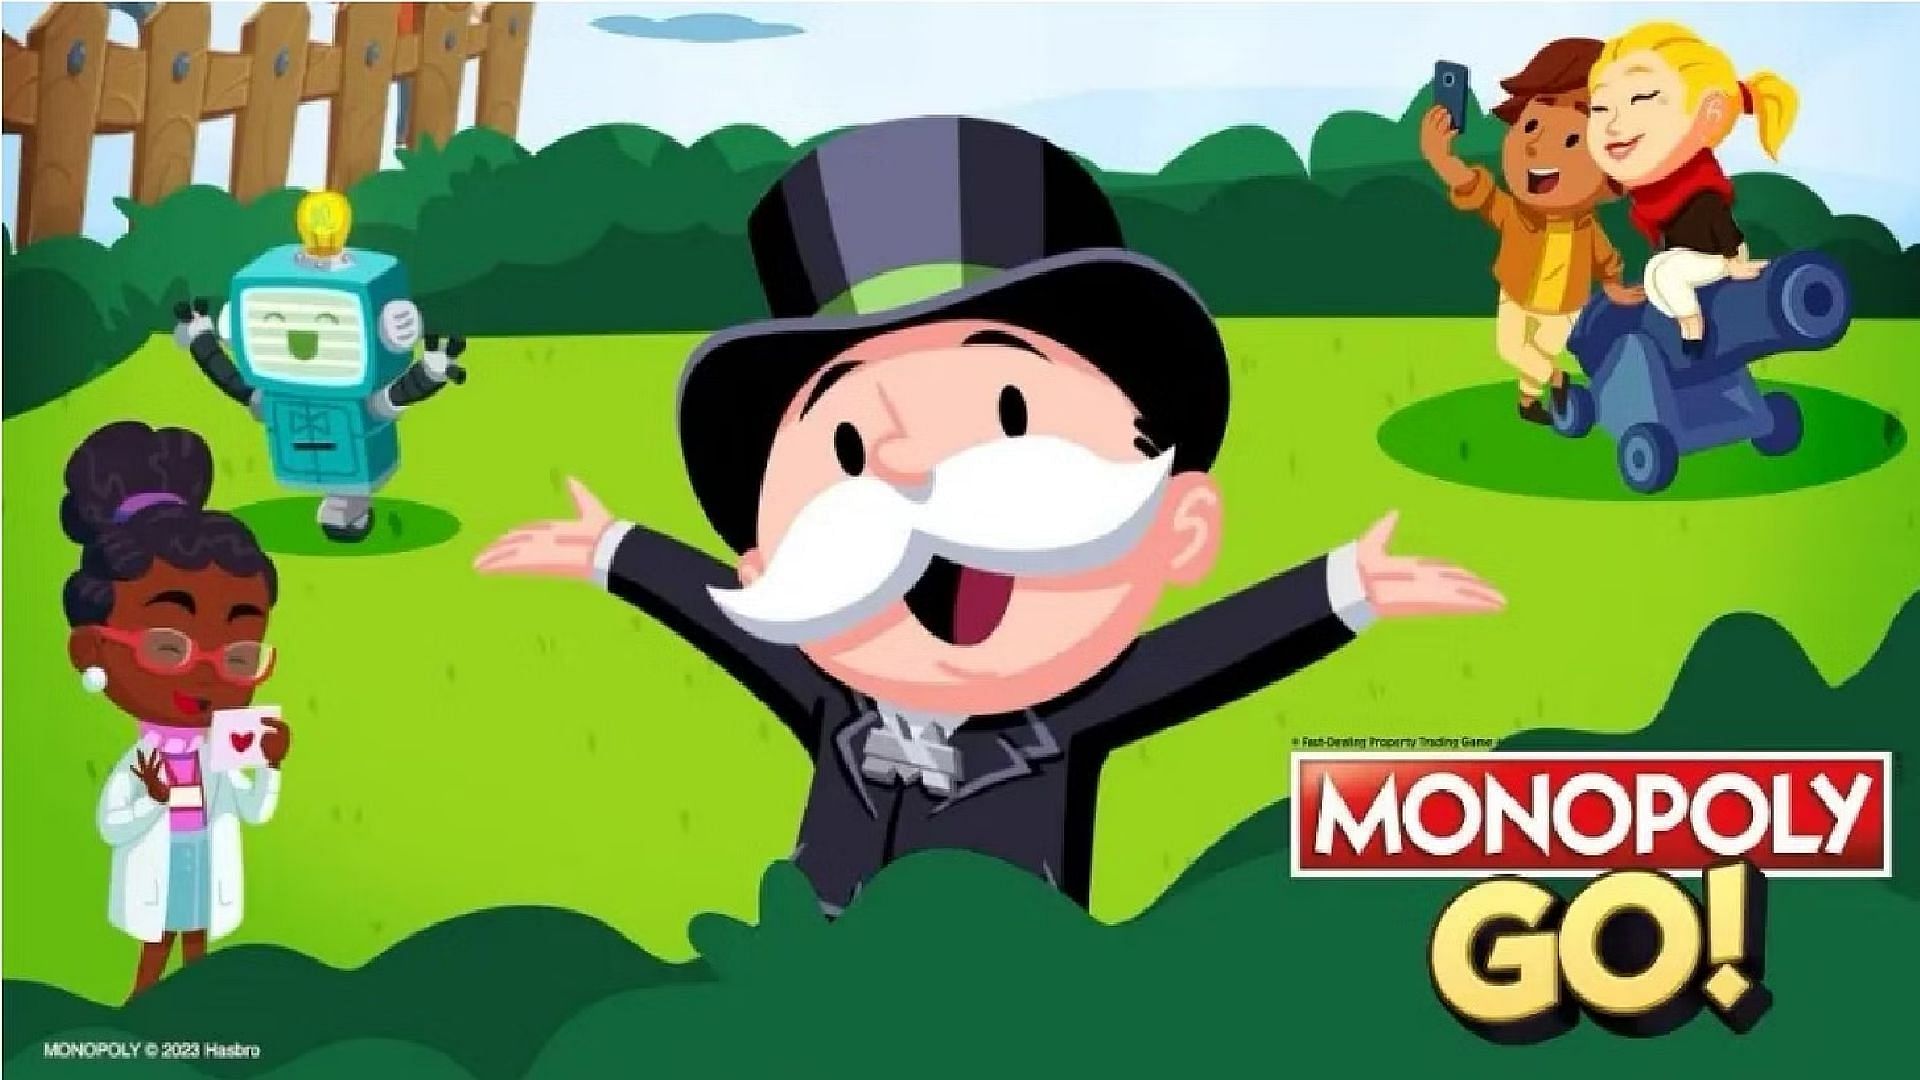 Monopoly Go Peg-E Prize Drop event rewards